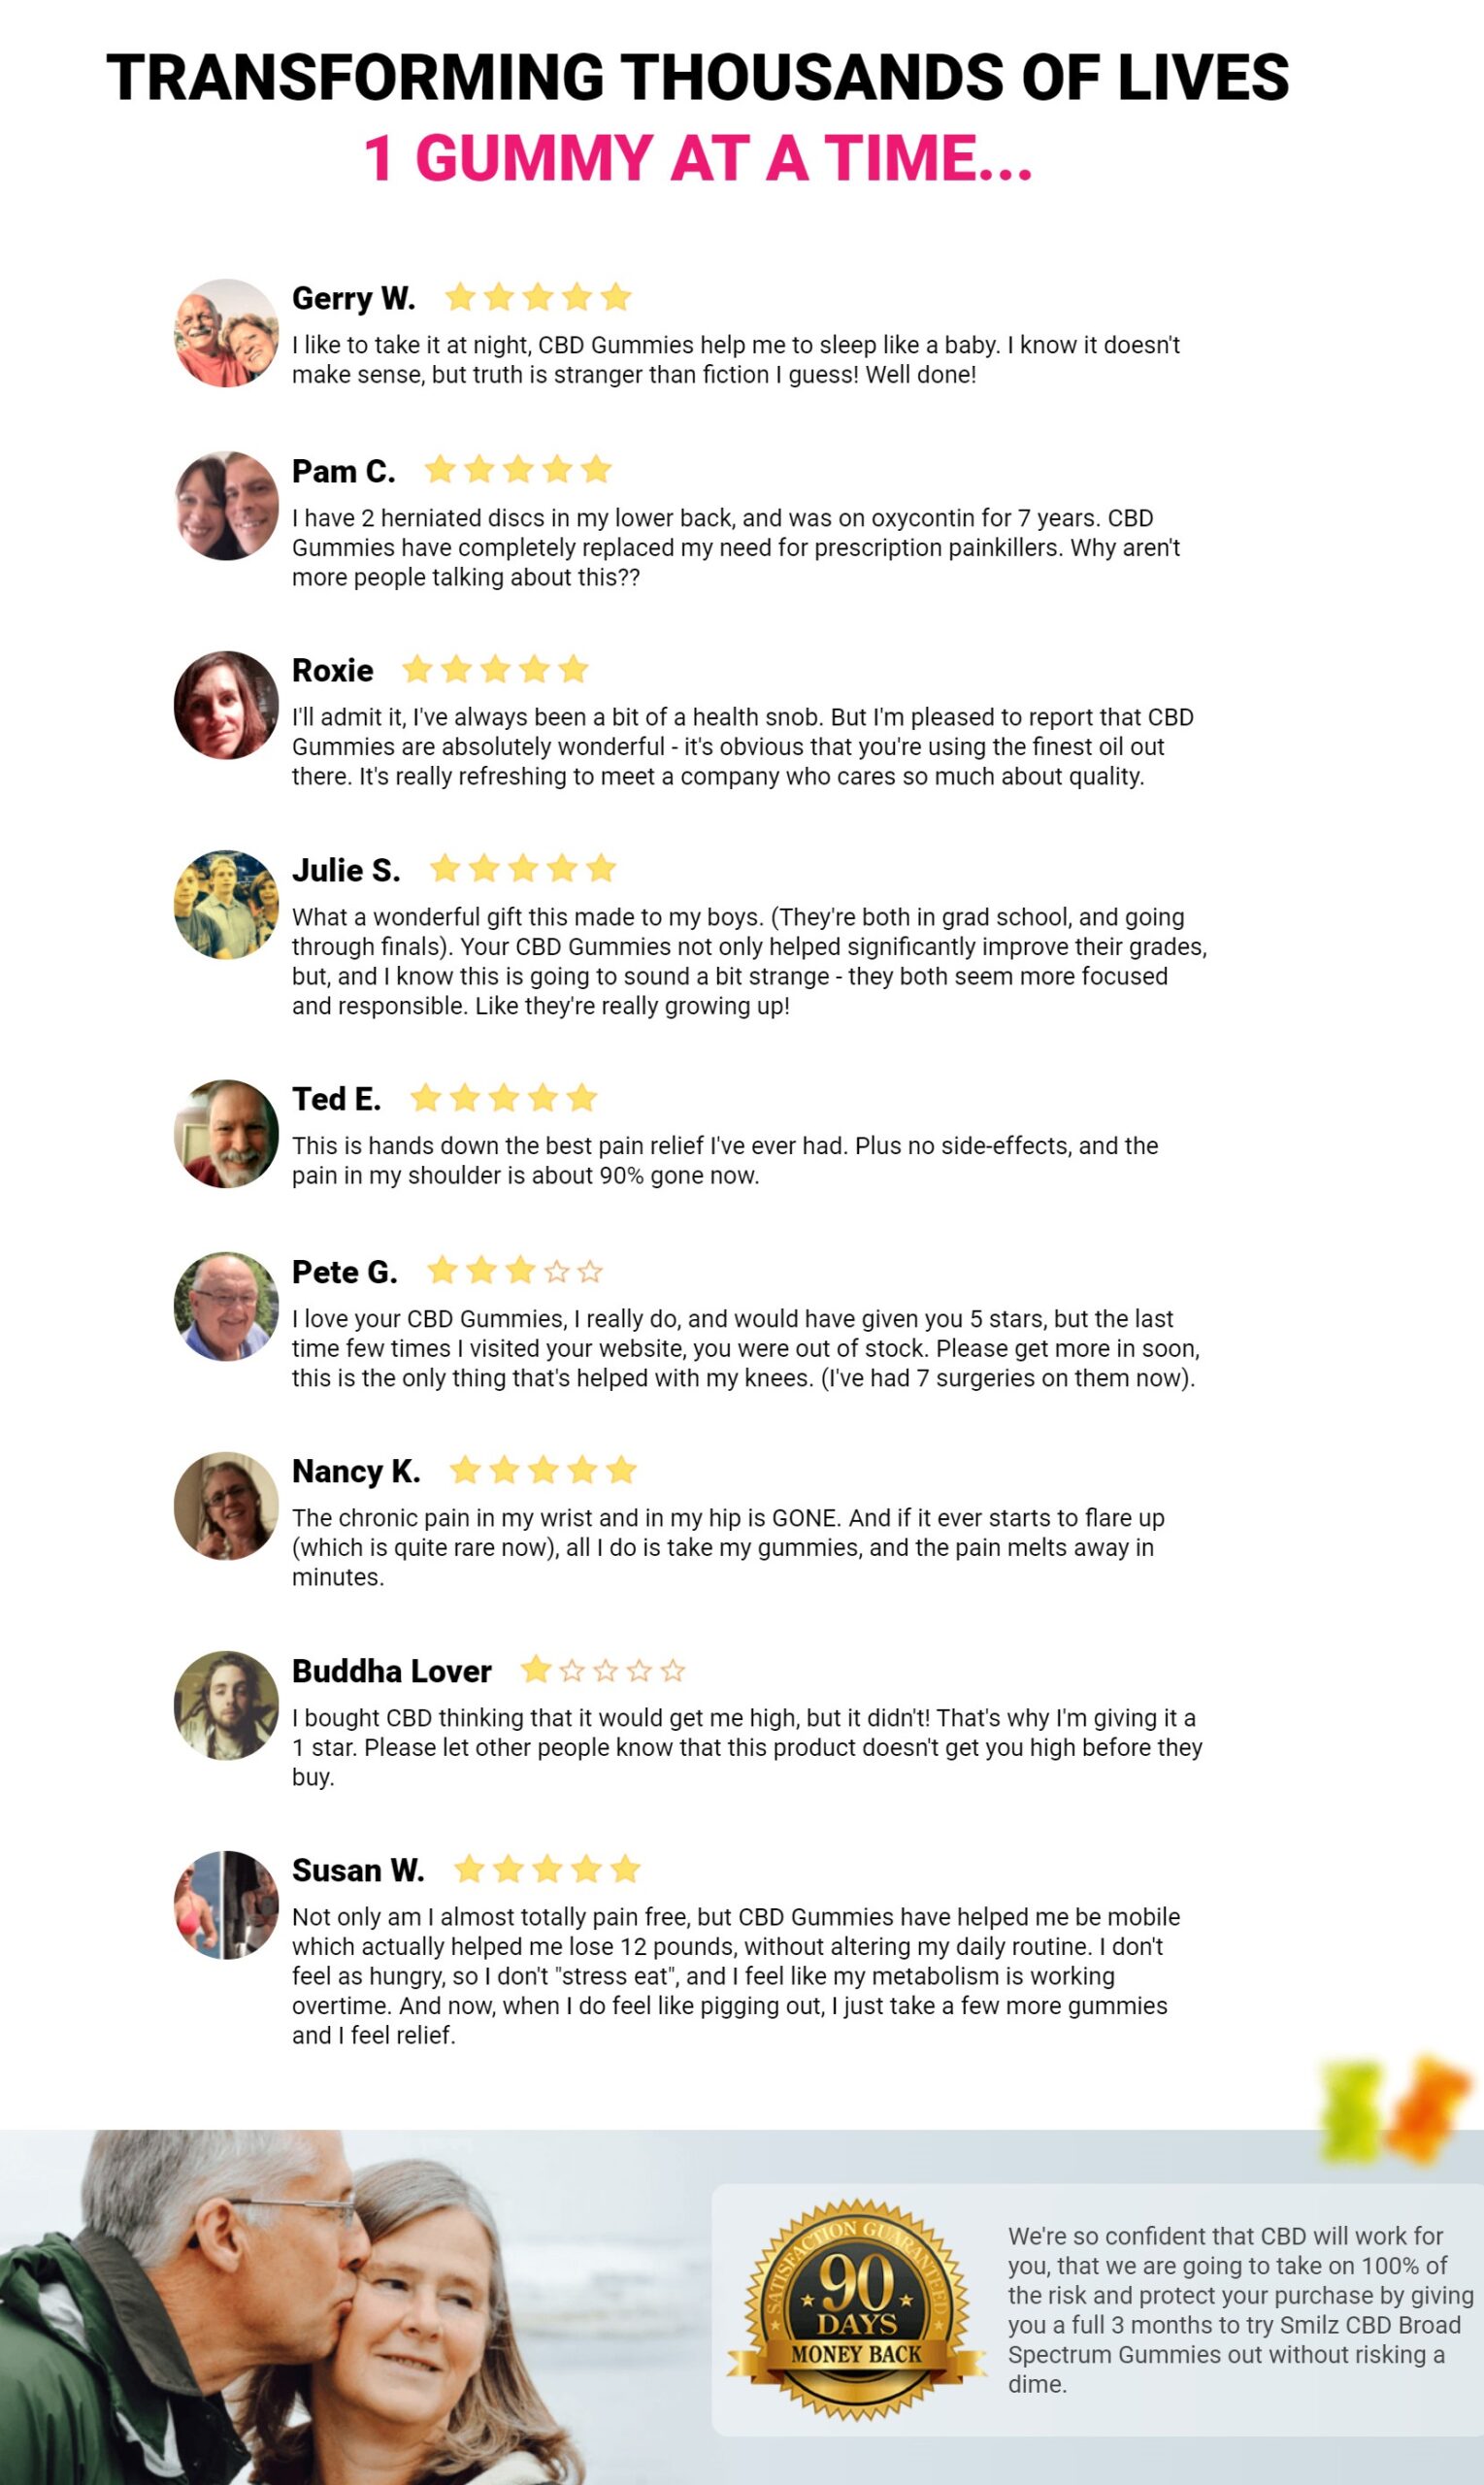 Smilz CBD Gummies USA Real Users Reviews